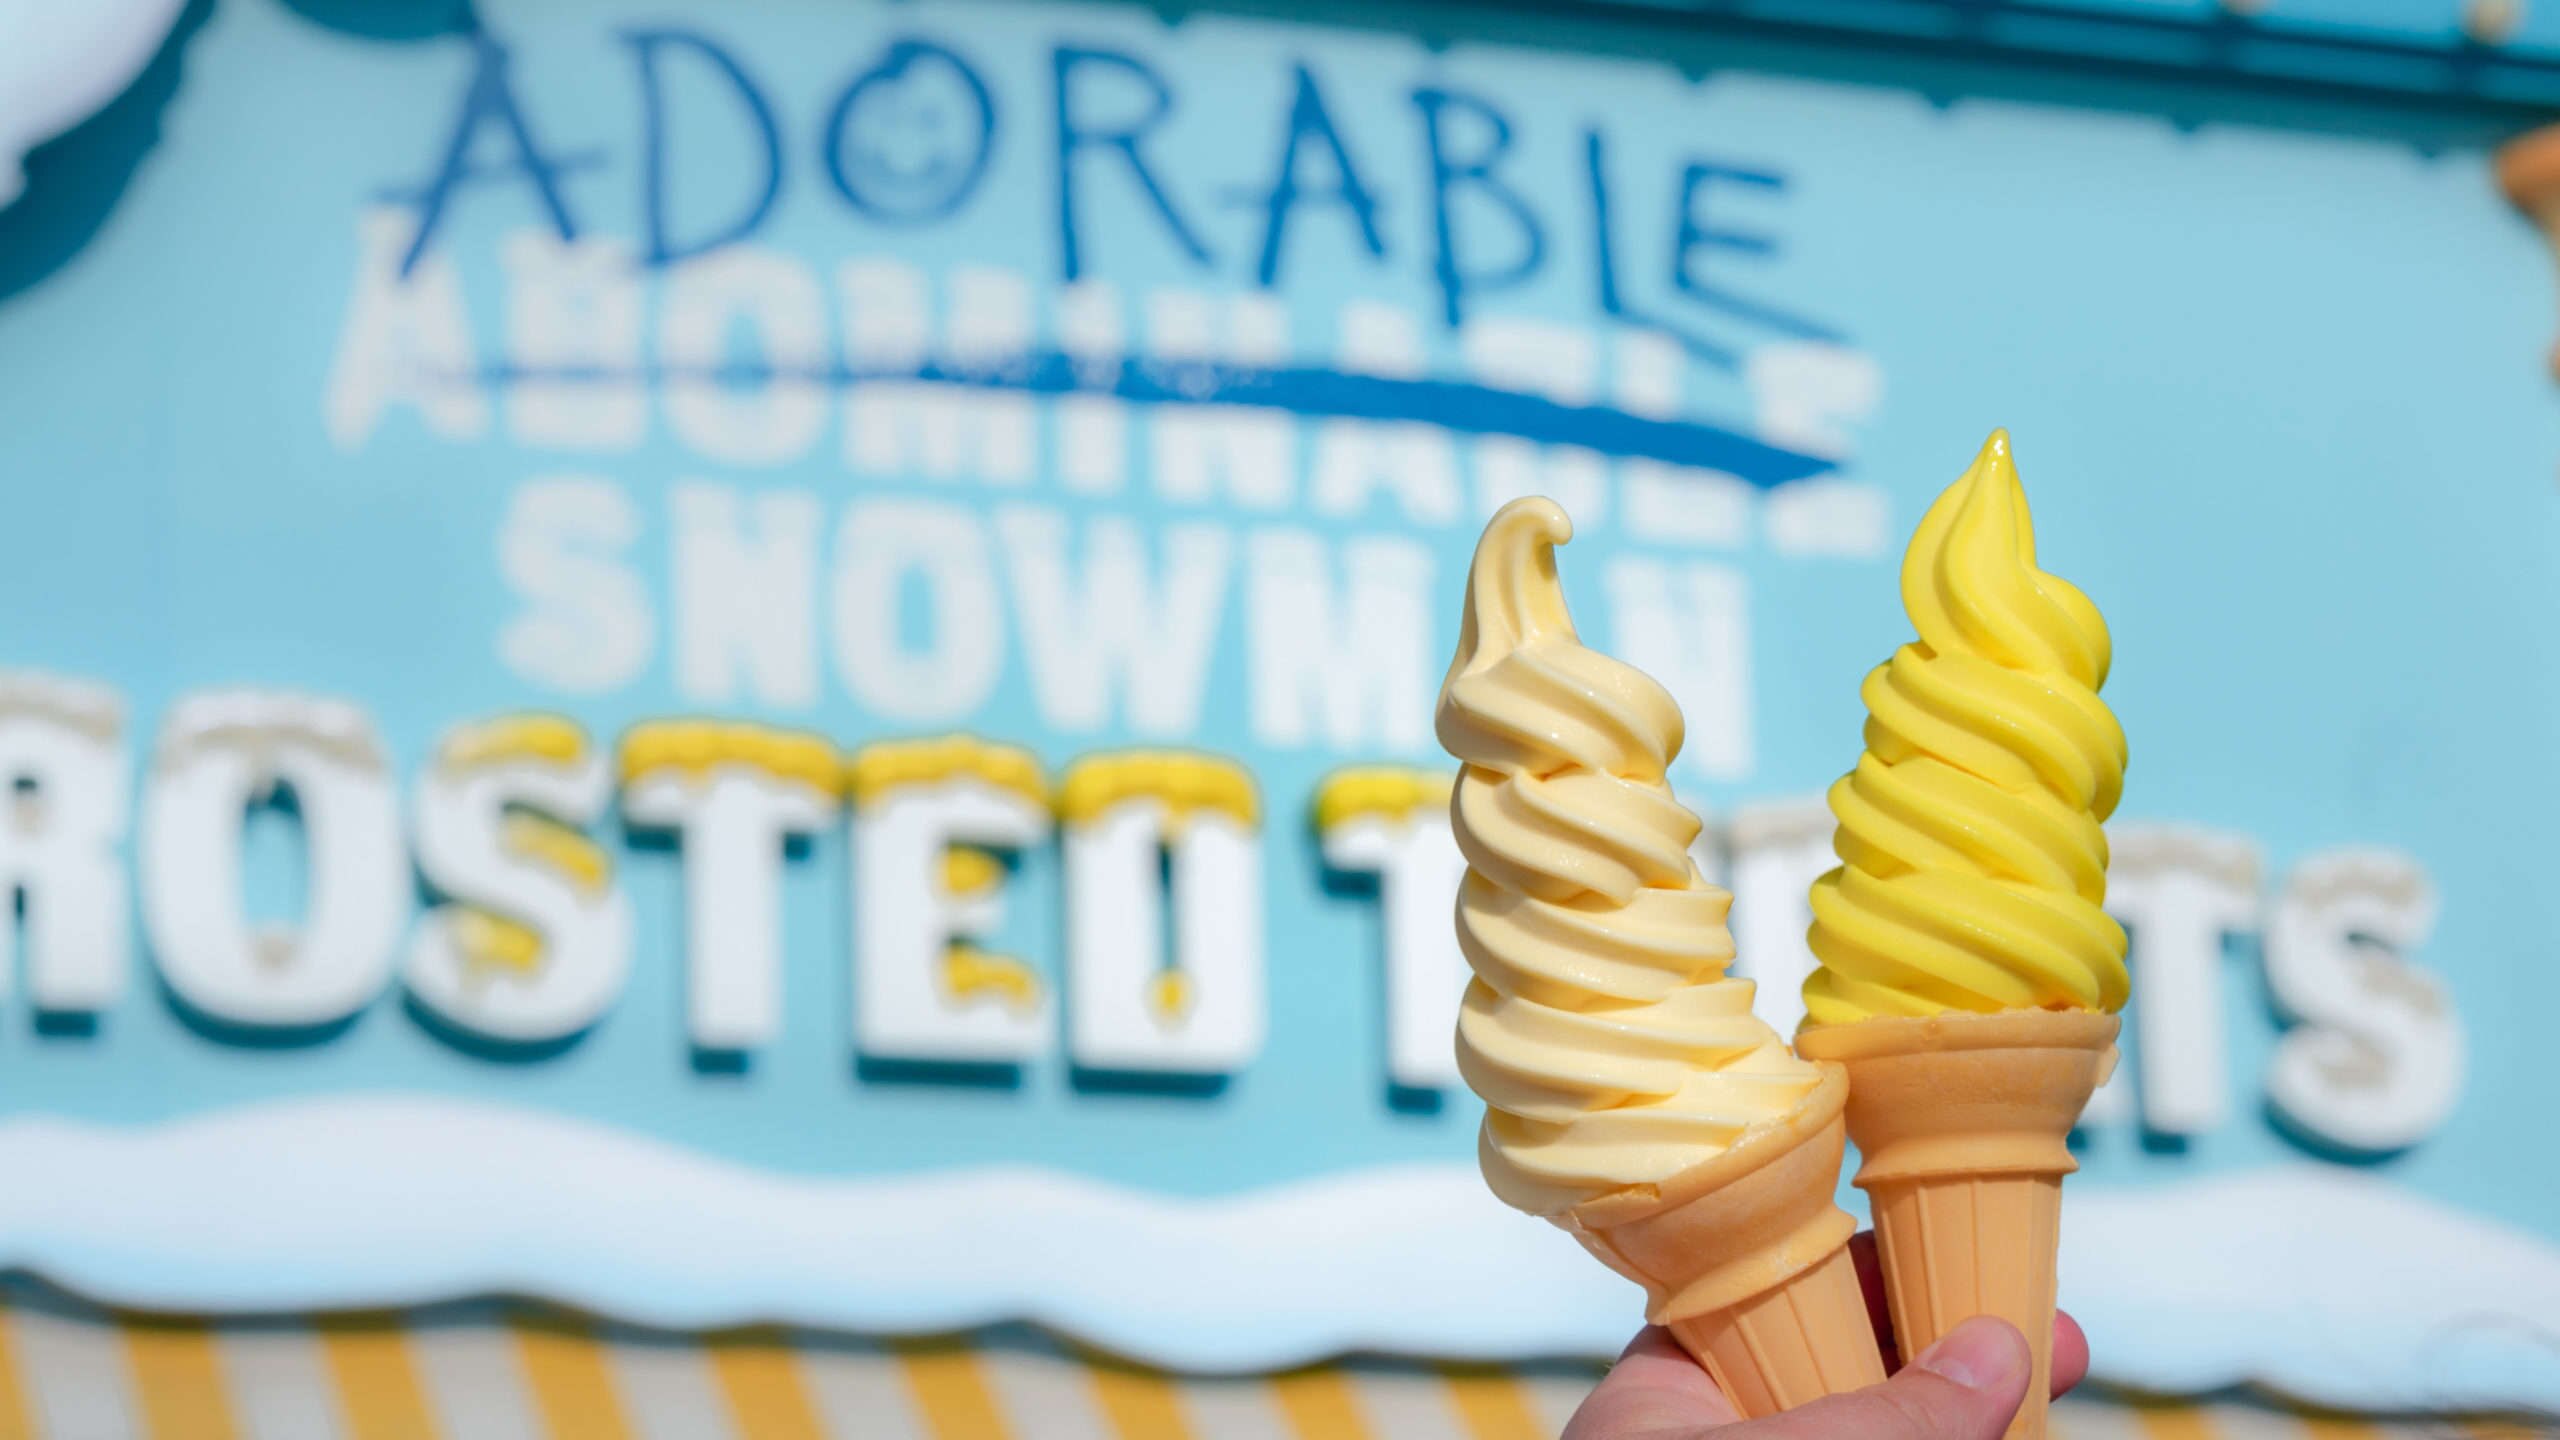 Adorable Snowman's Dole Whip soft-serve at Disney California Adventure